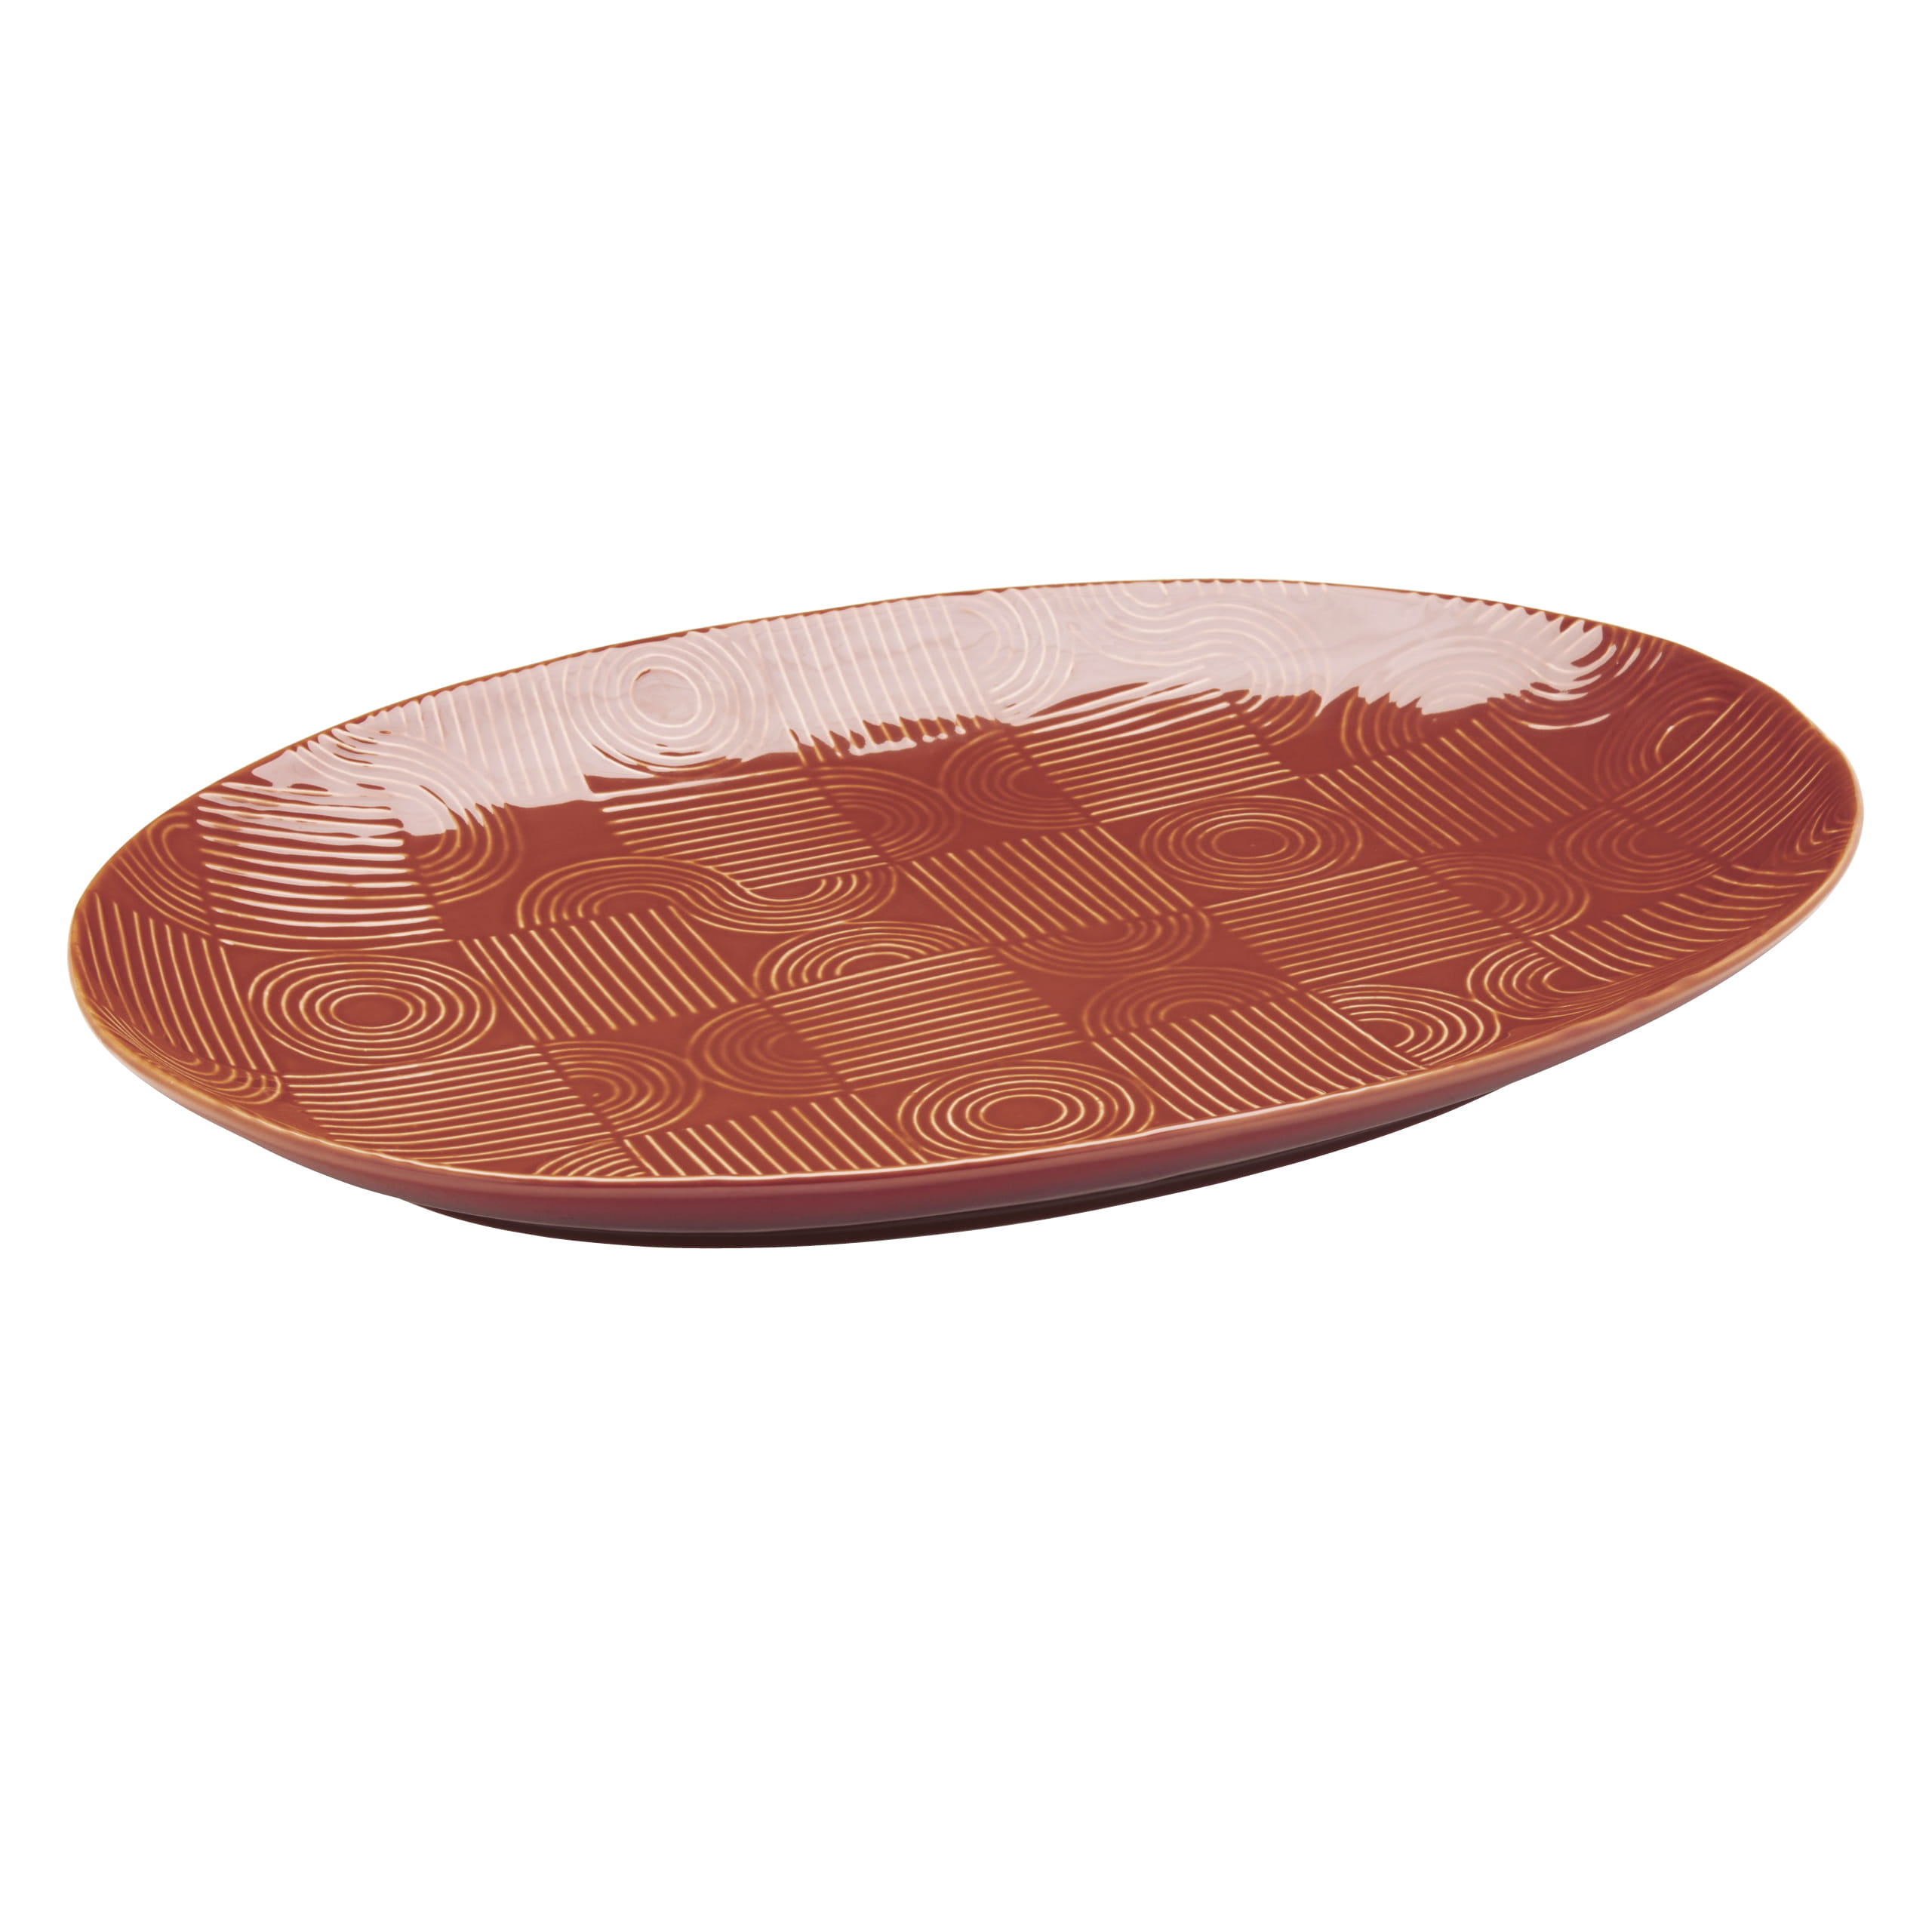 ARC Platte oval, 41 x 30 cm, Terracotta, Keramik, in Geschenkbox